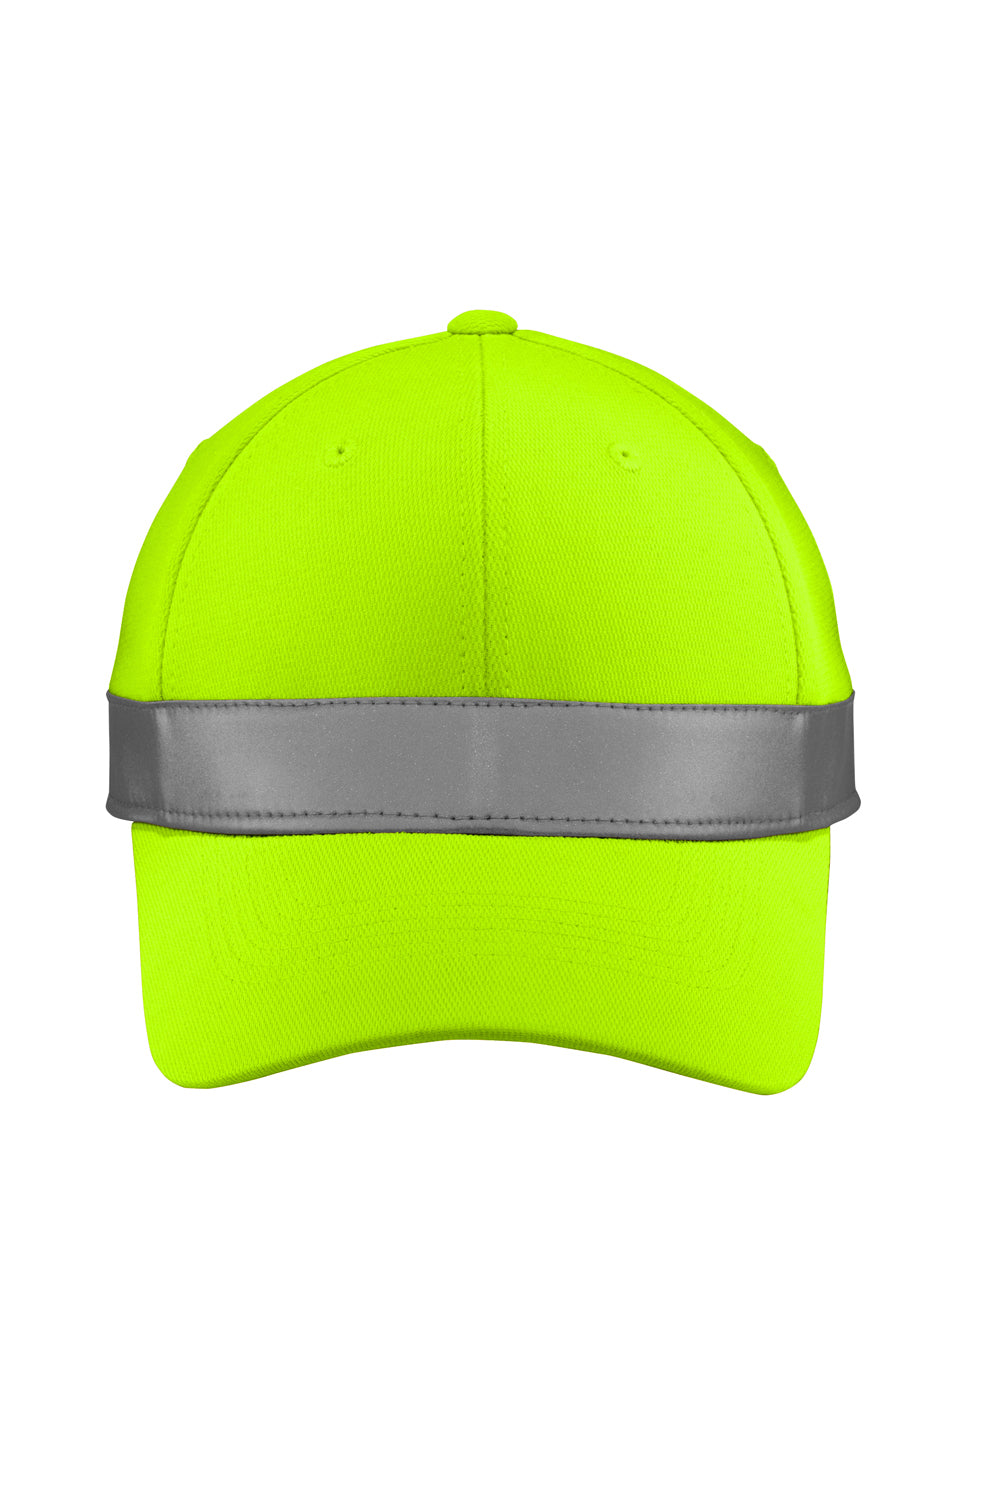 CornerStone CS802 Mens Adjustable Hat Safety Yellow Front